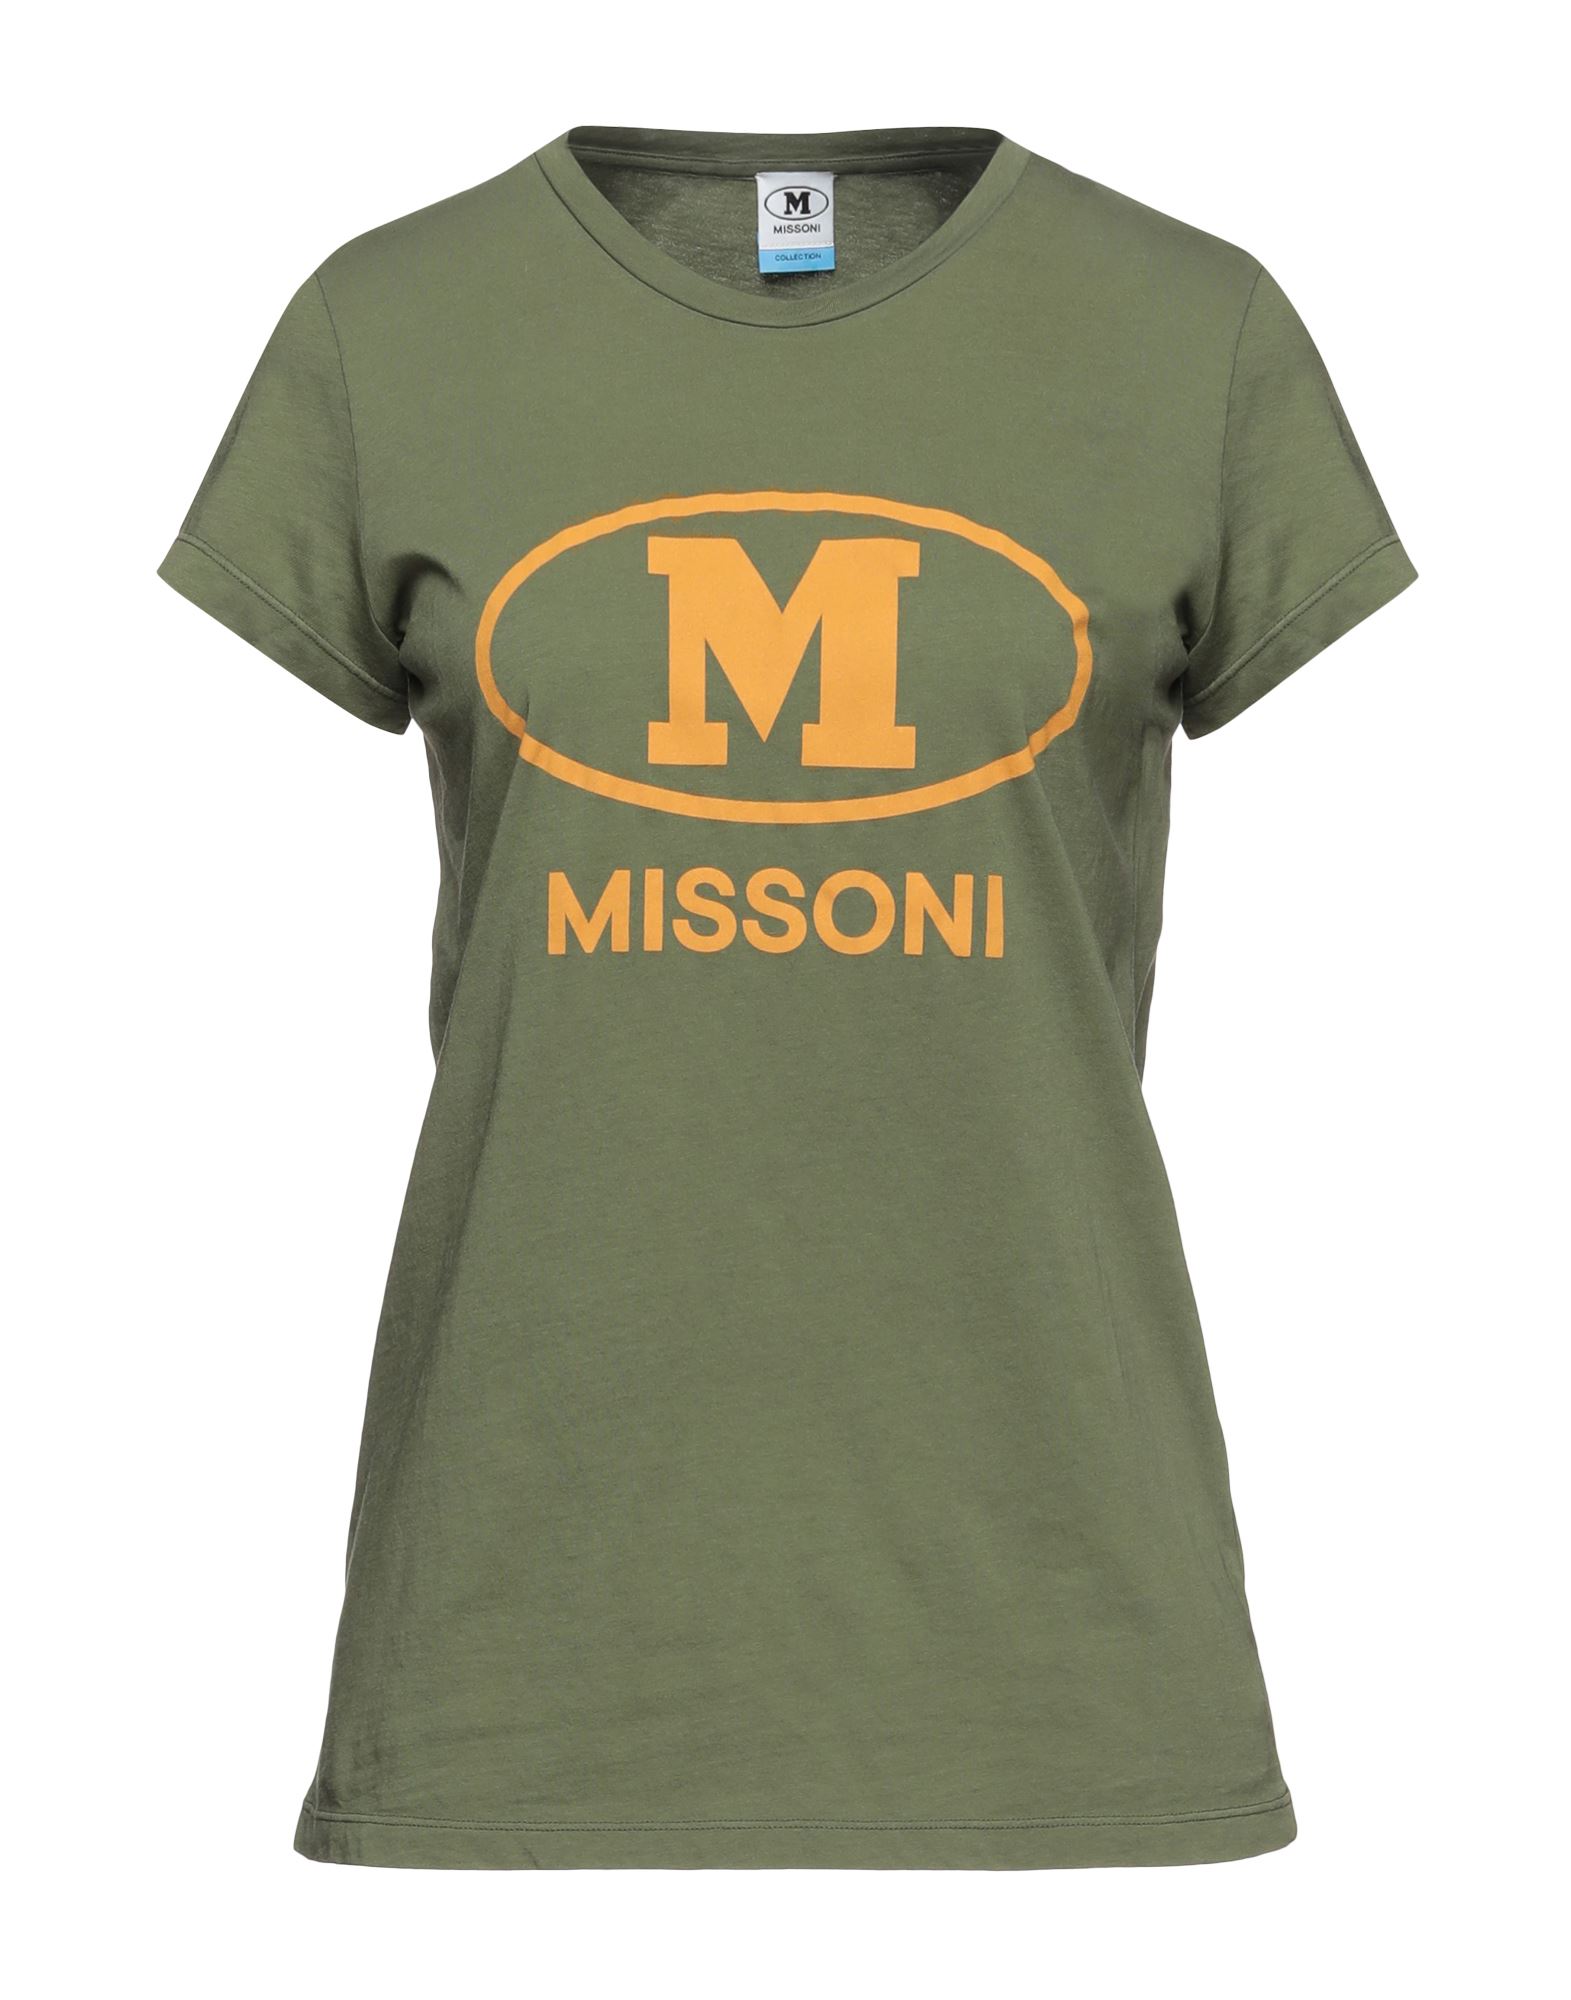 M Missoni T-shirts In Military Green